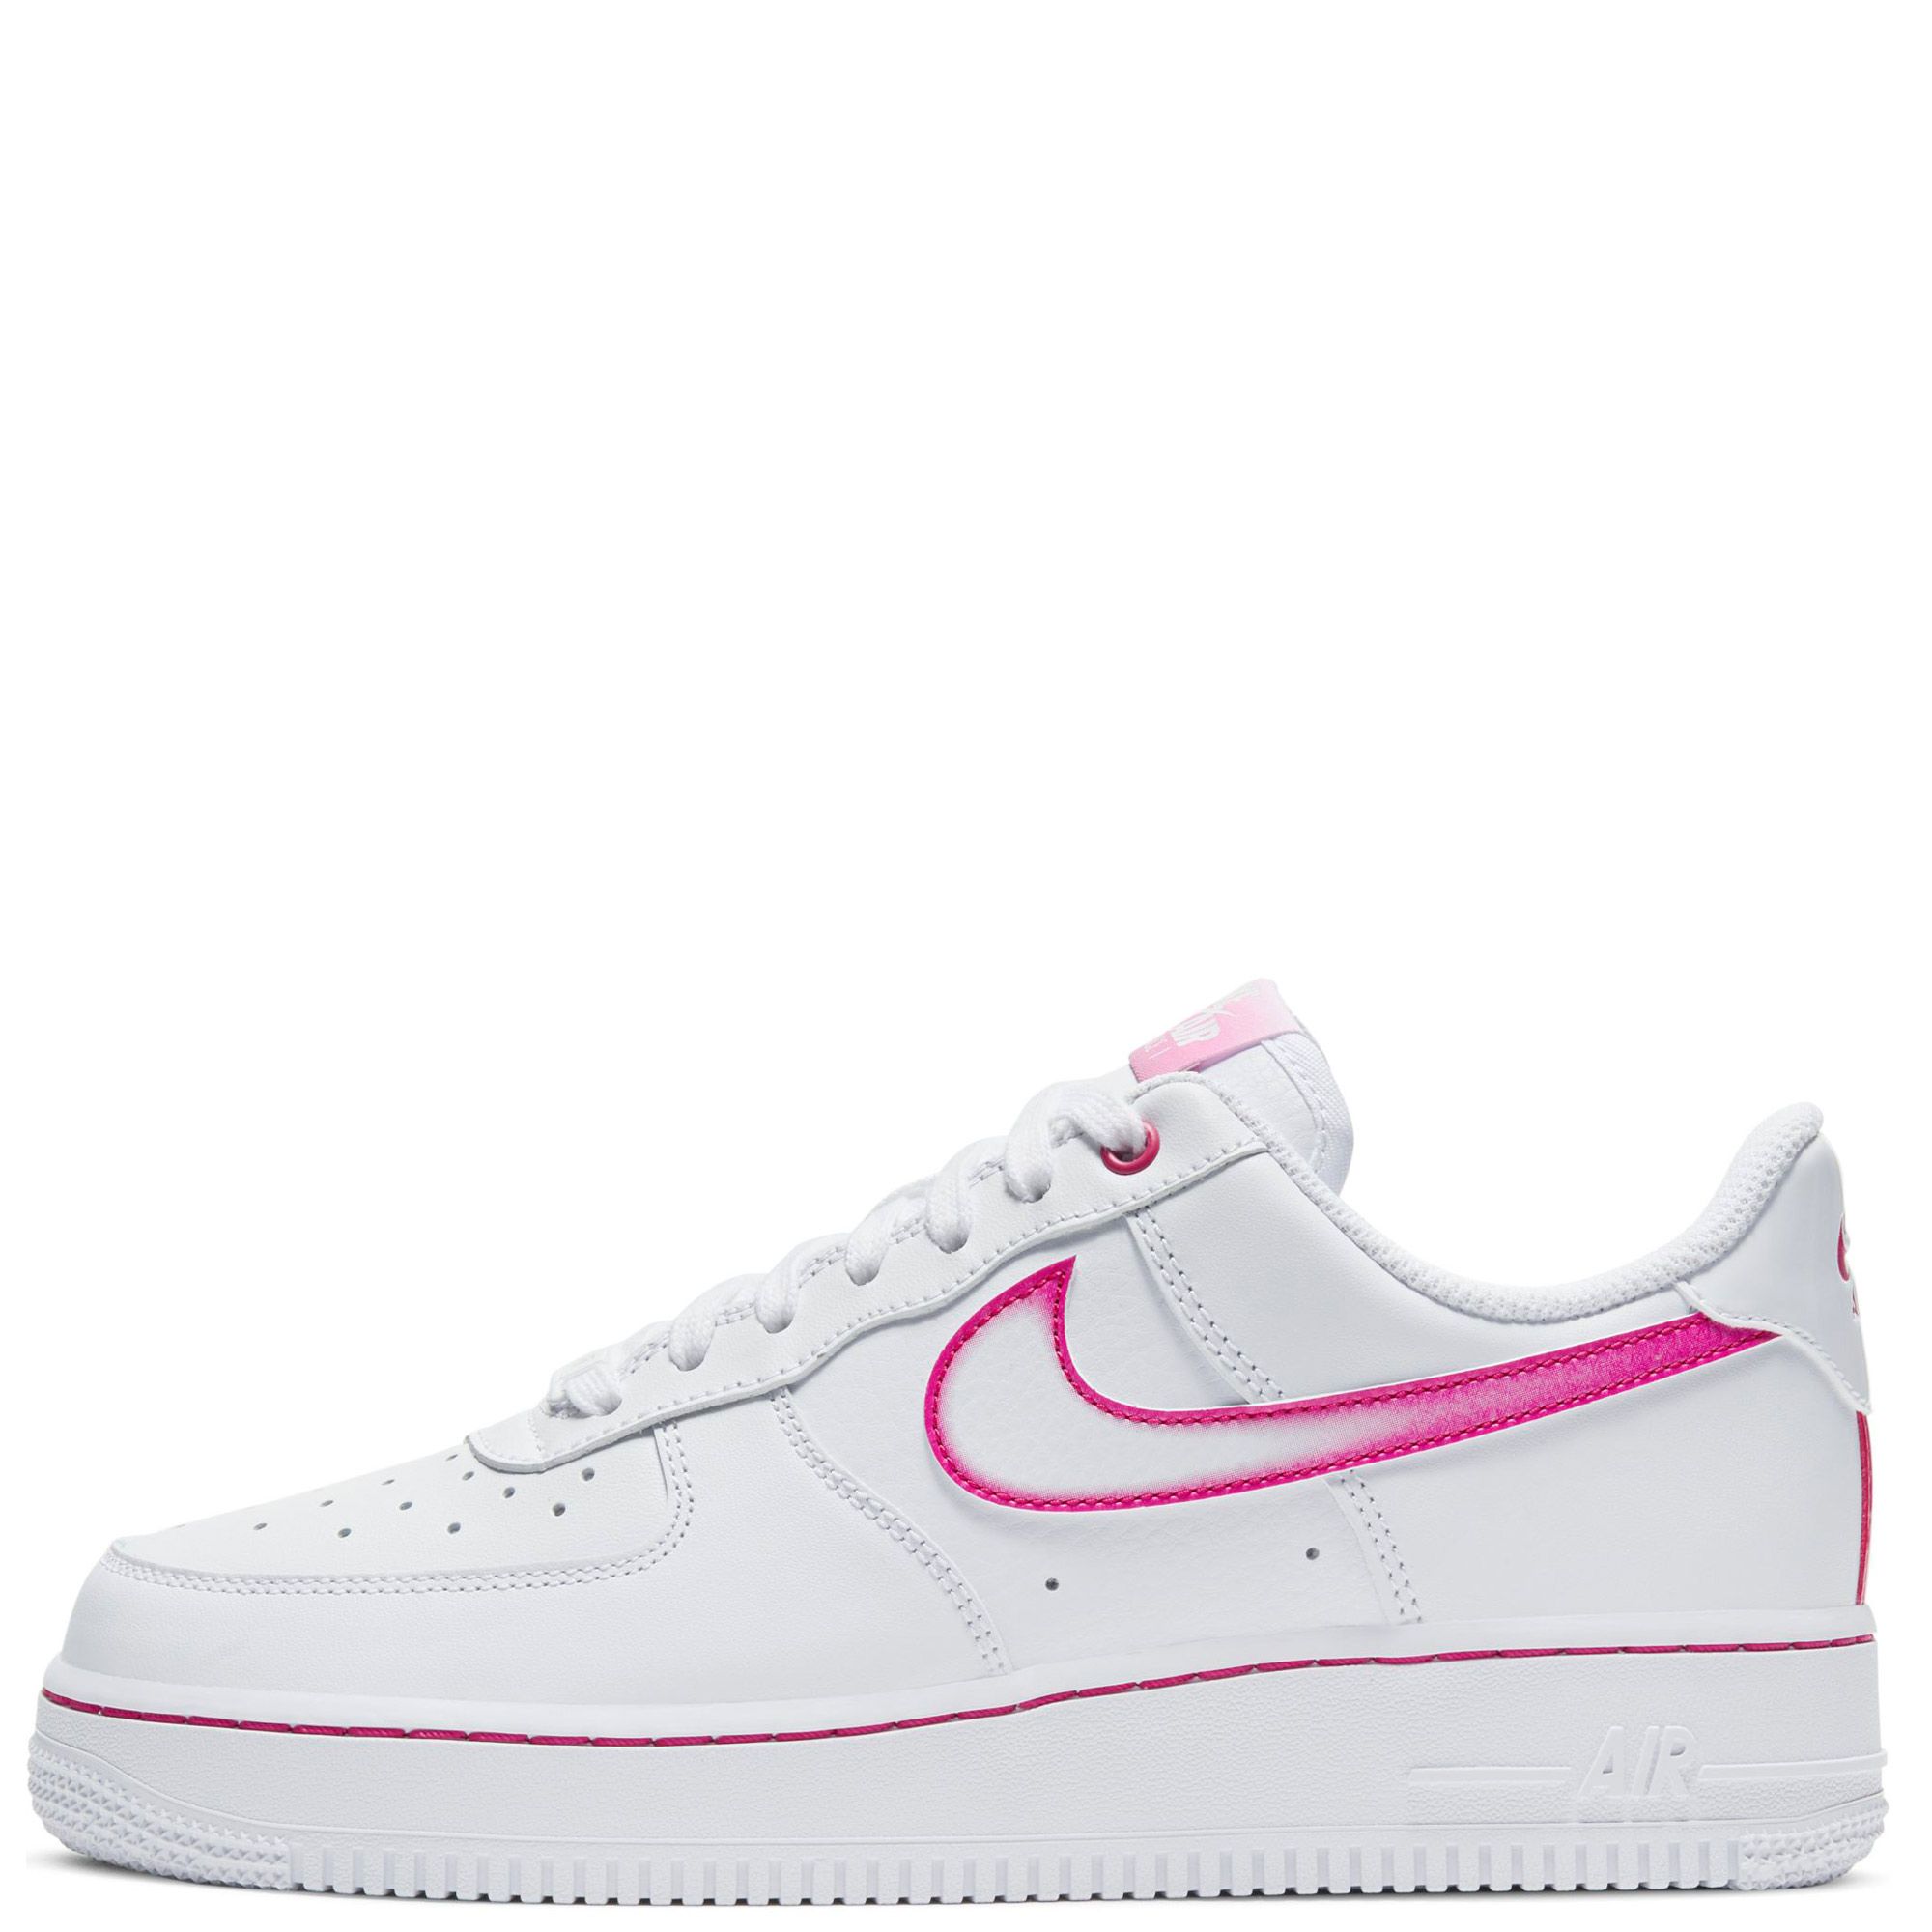 Nike Air Force 1 '07 White/Fireberry